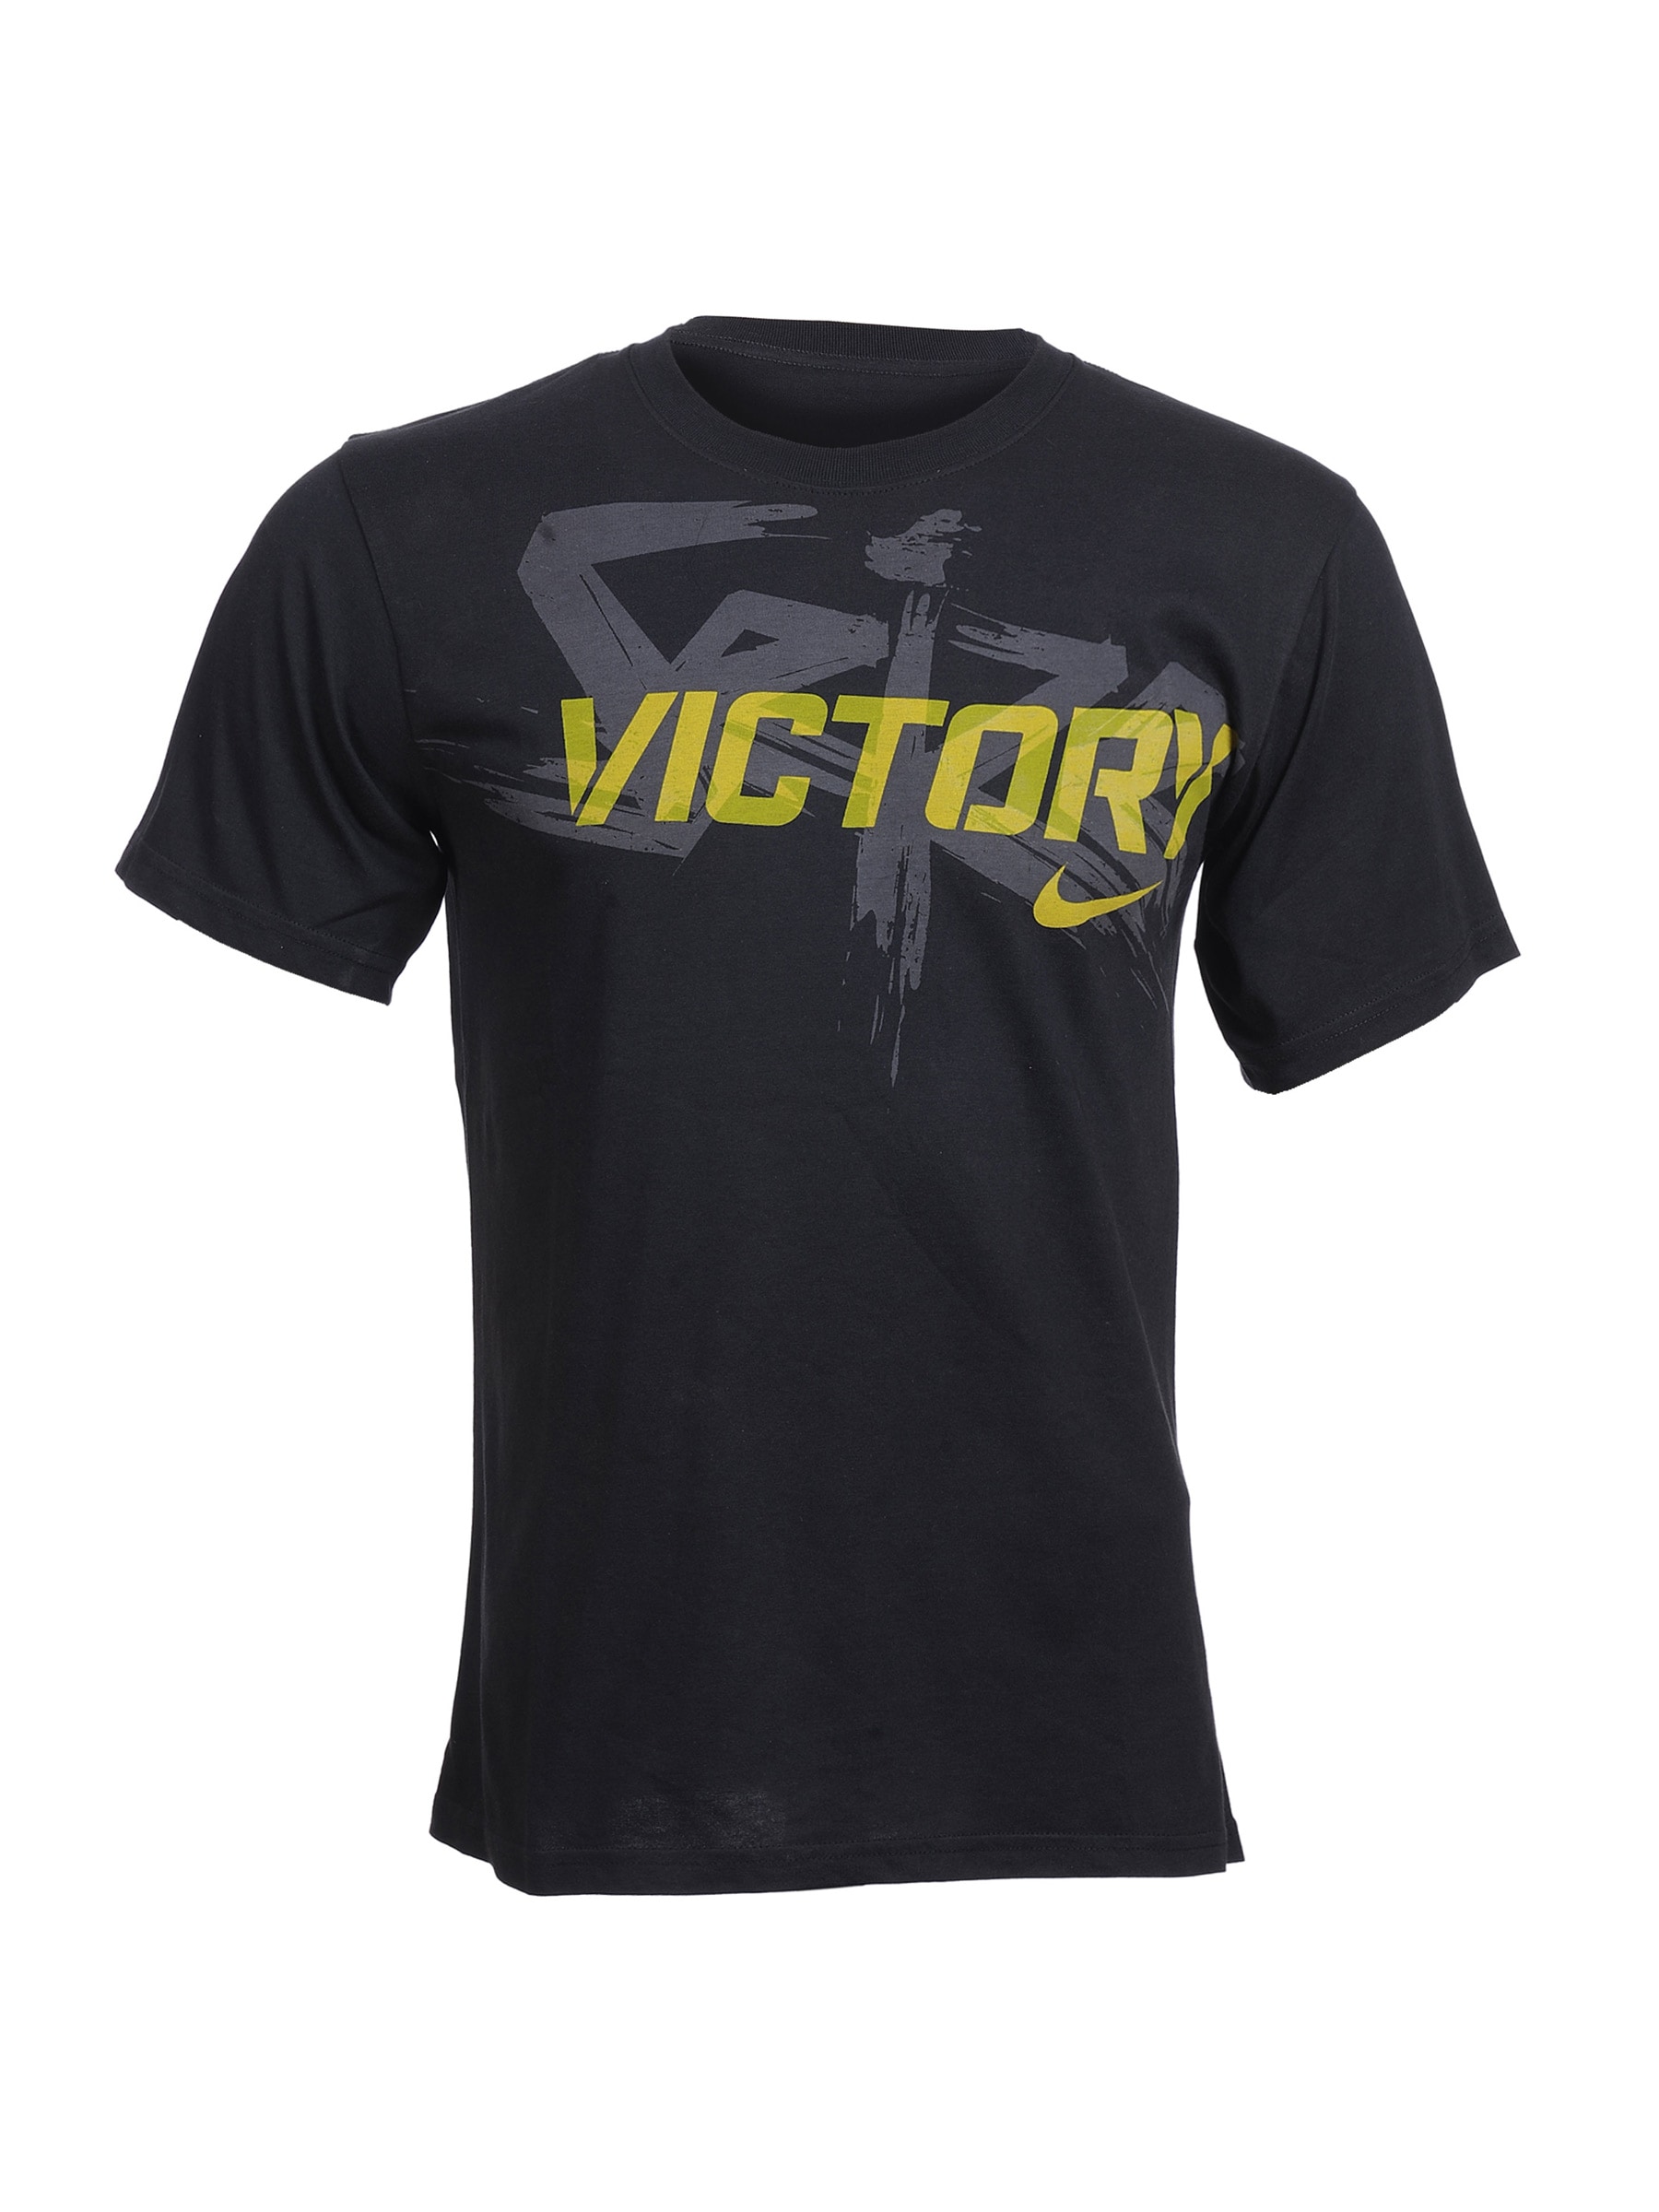 Nike Mens Seize Victory Black T-shirt